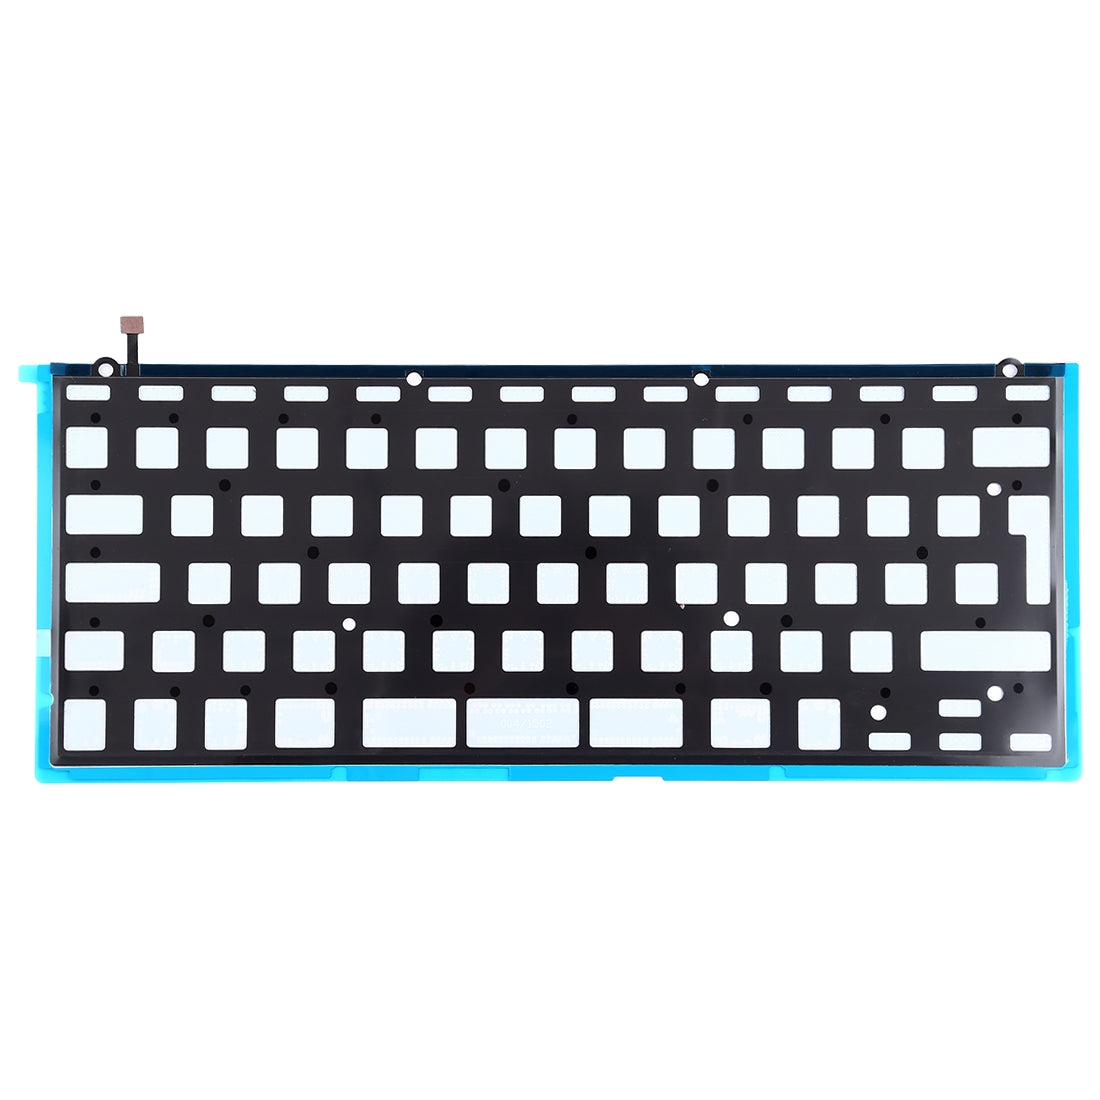 Backlight Keyboard UK Version without ñ Apple MacBook Pro Retina 13 A1502